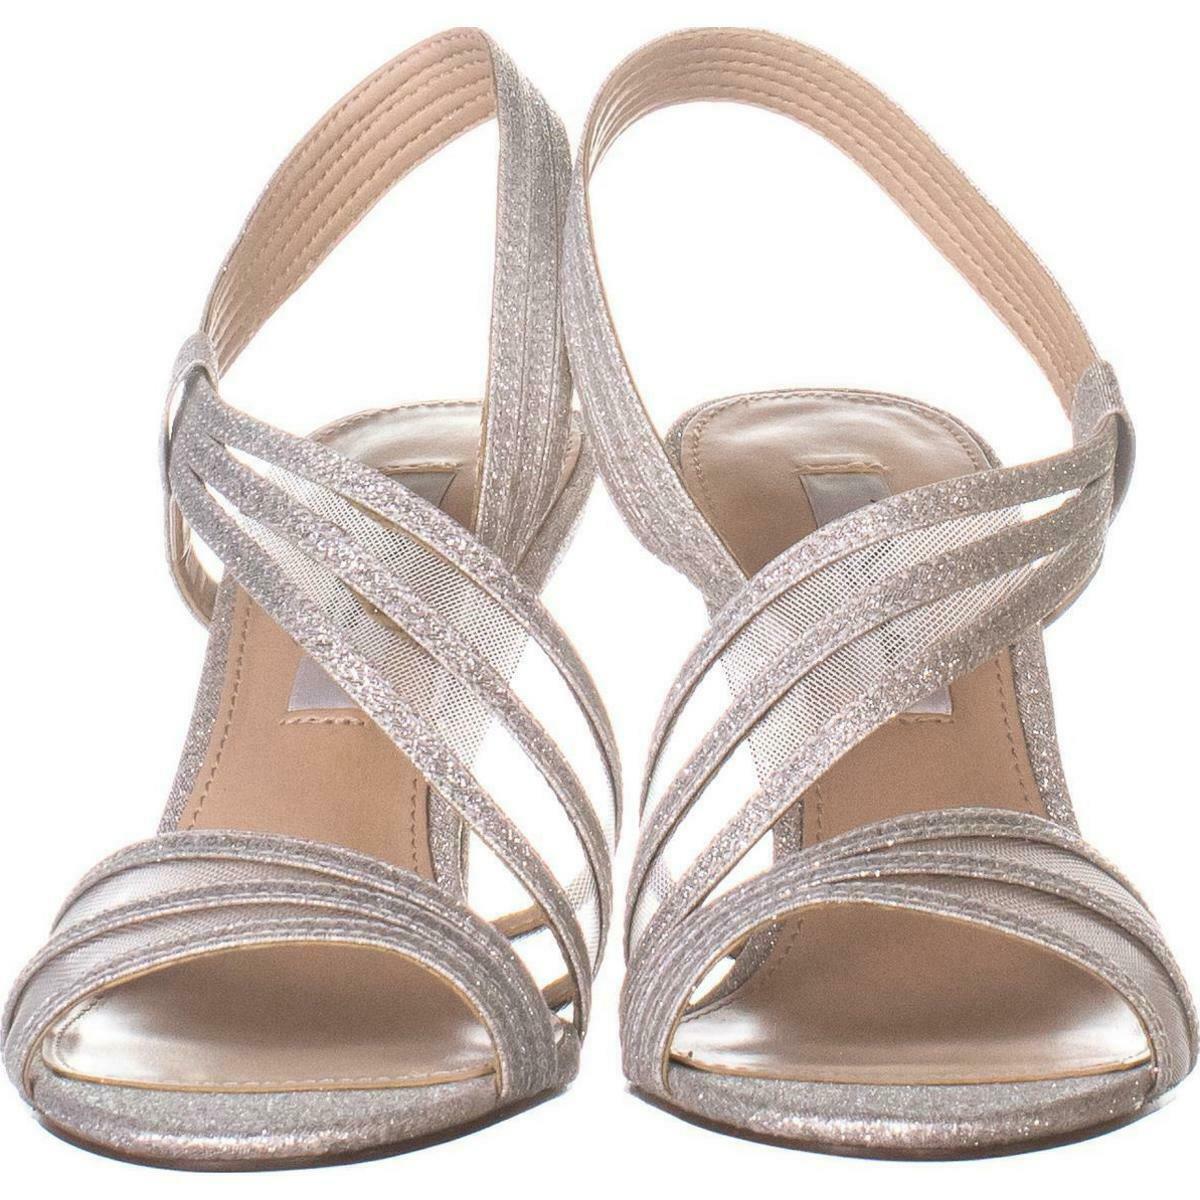 Nina Vitalia Slingback Dress Sandals 873, Silver, 7 US - Sandals & Flip ...